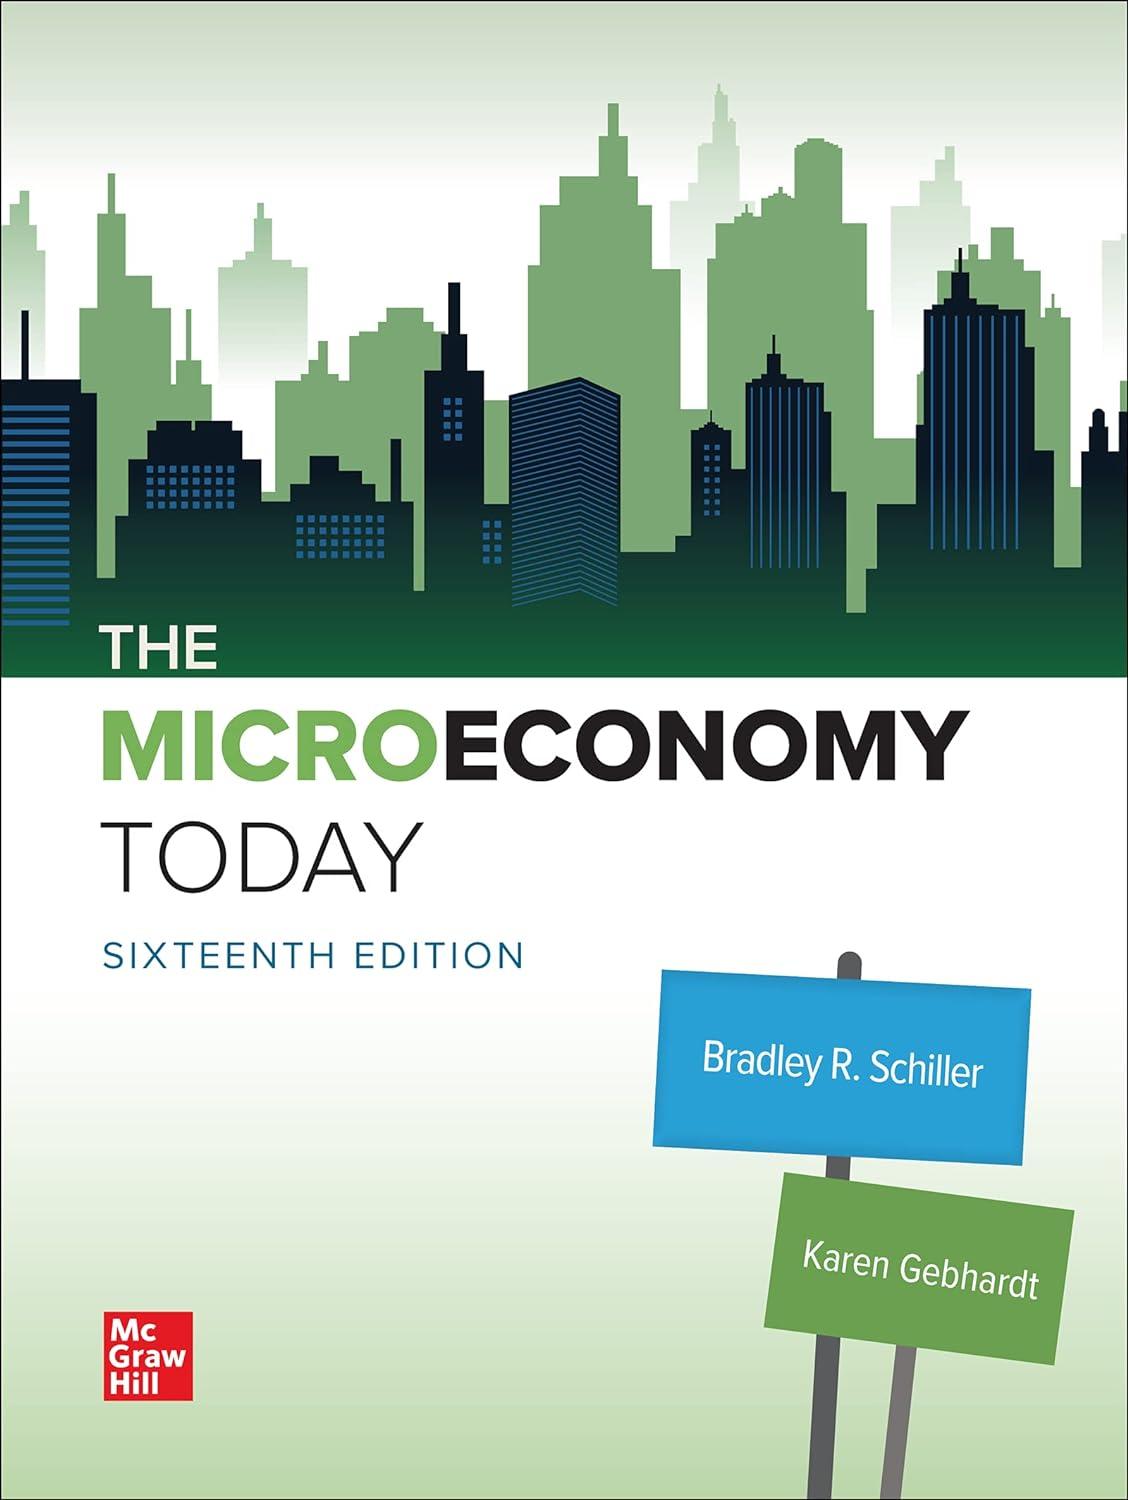 the micro economy today 16th edition bradley r. schiller , karen gebhardt 126427341x, 978-1264273416